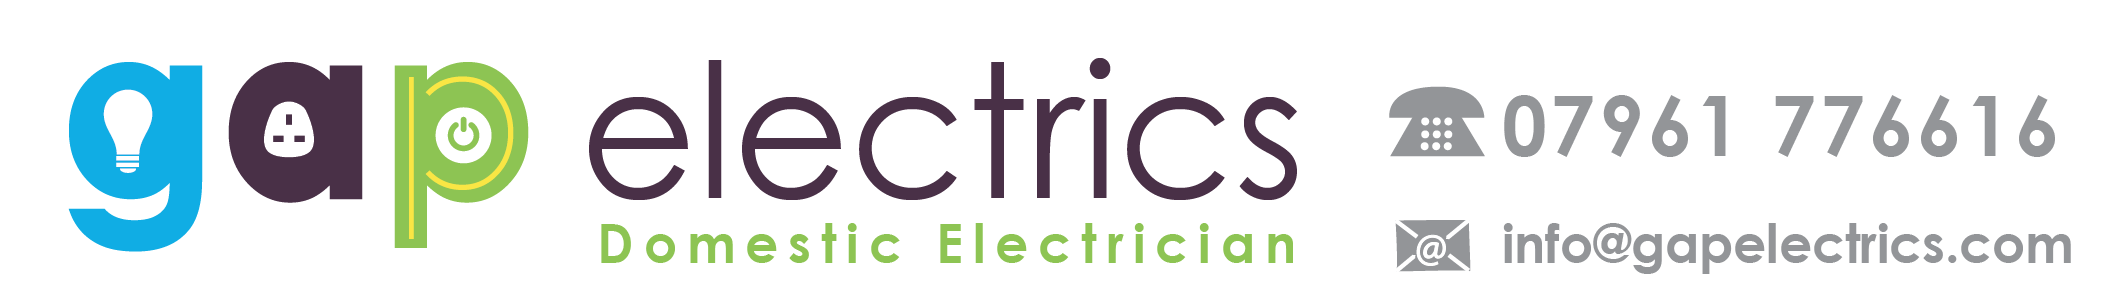 GAP electrics logo